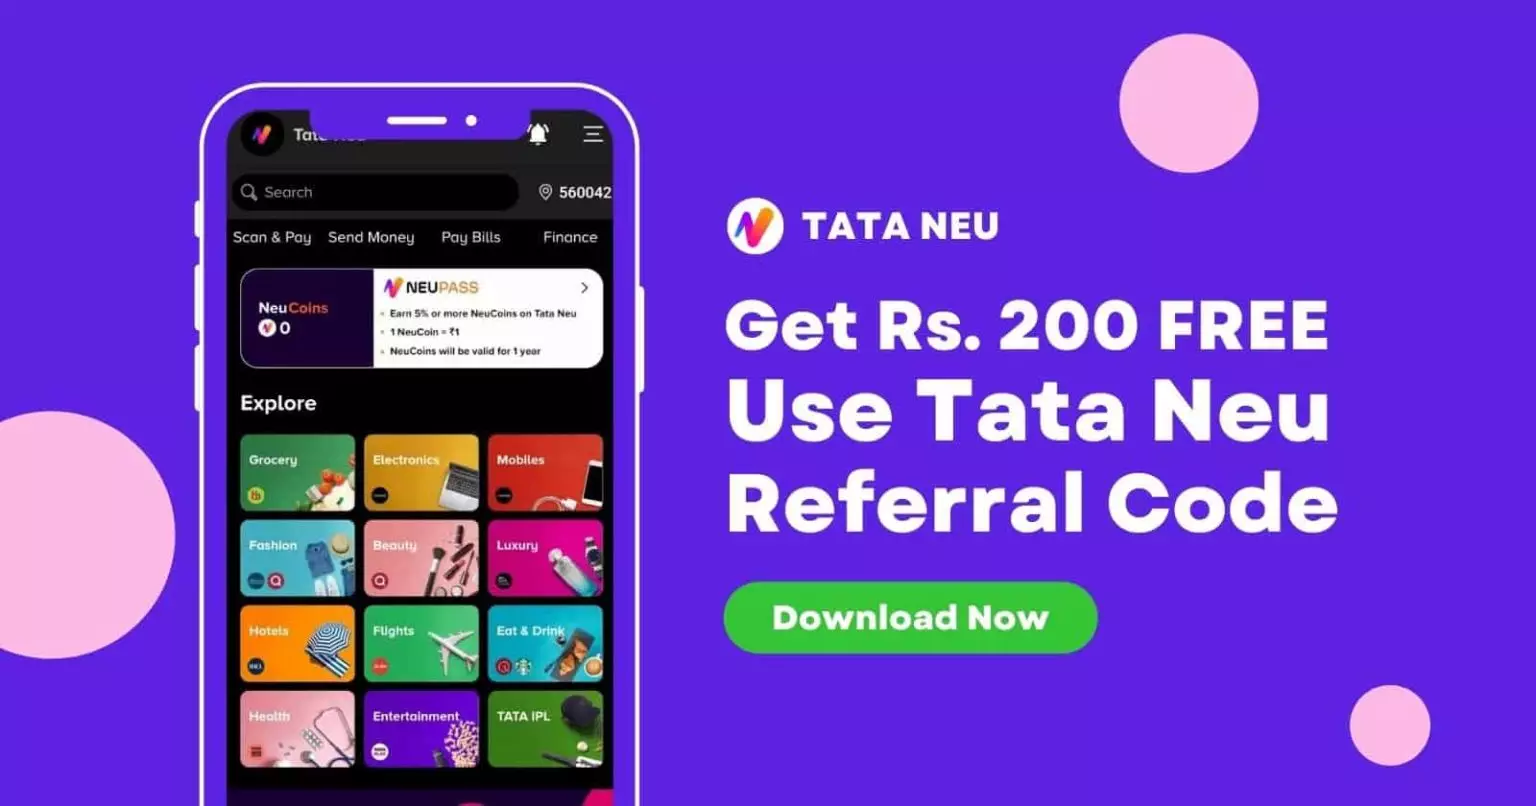 Use Tata Neu Referral Code "PANK1294" & Get 500 NeuCoins | Tata Neu Refer and Earn Offer